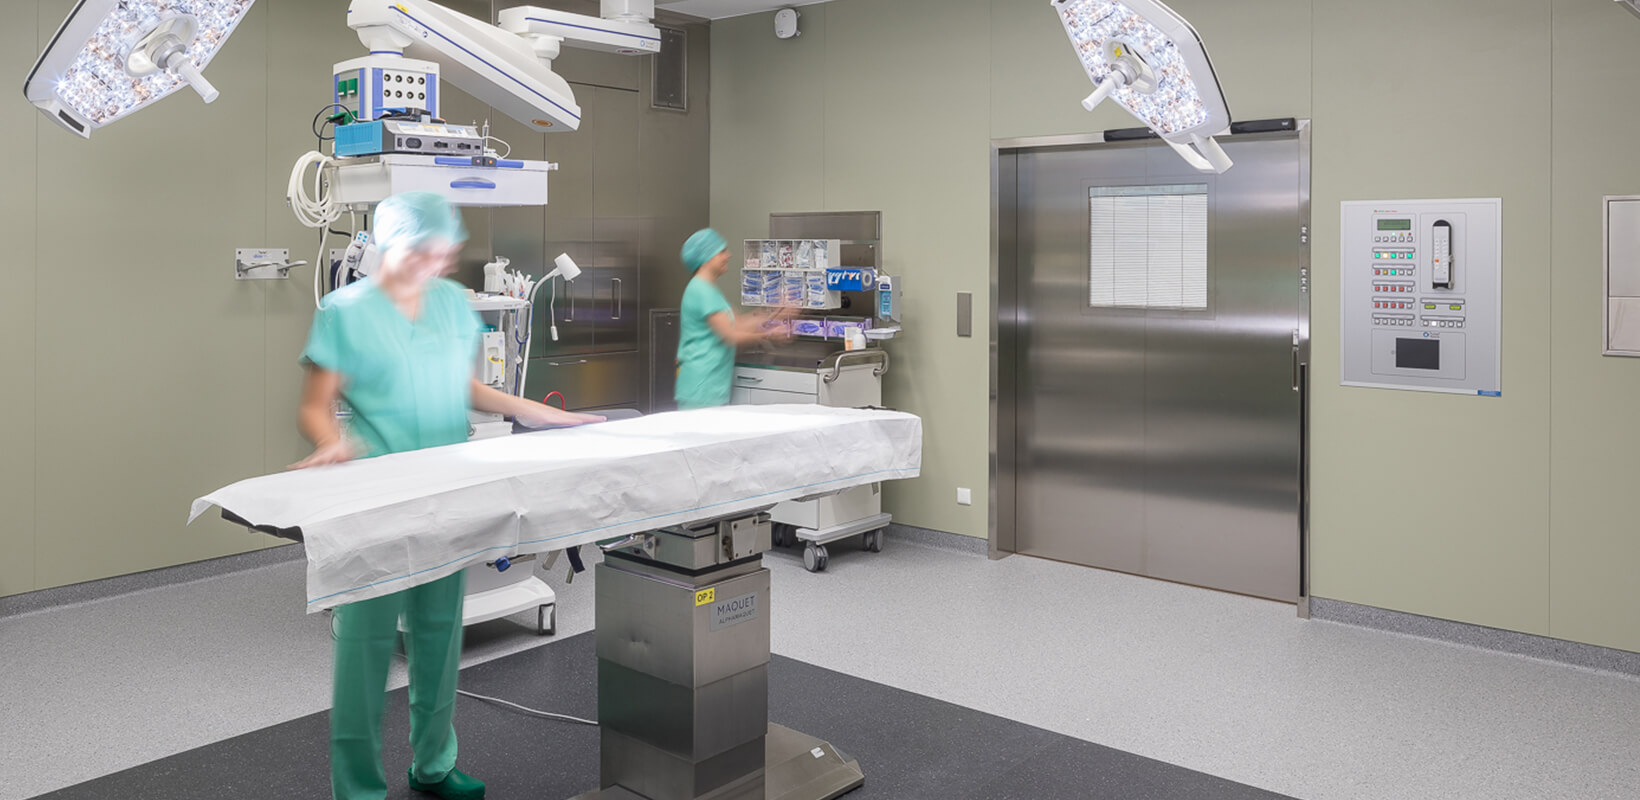 Klinika Diakonissen, novostavba operačního sálu v Linci, Rakousko